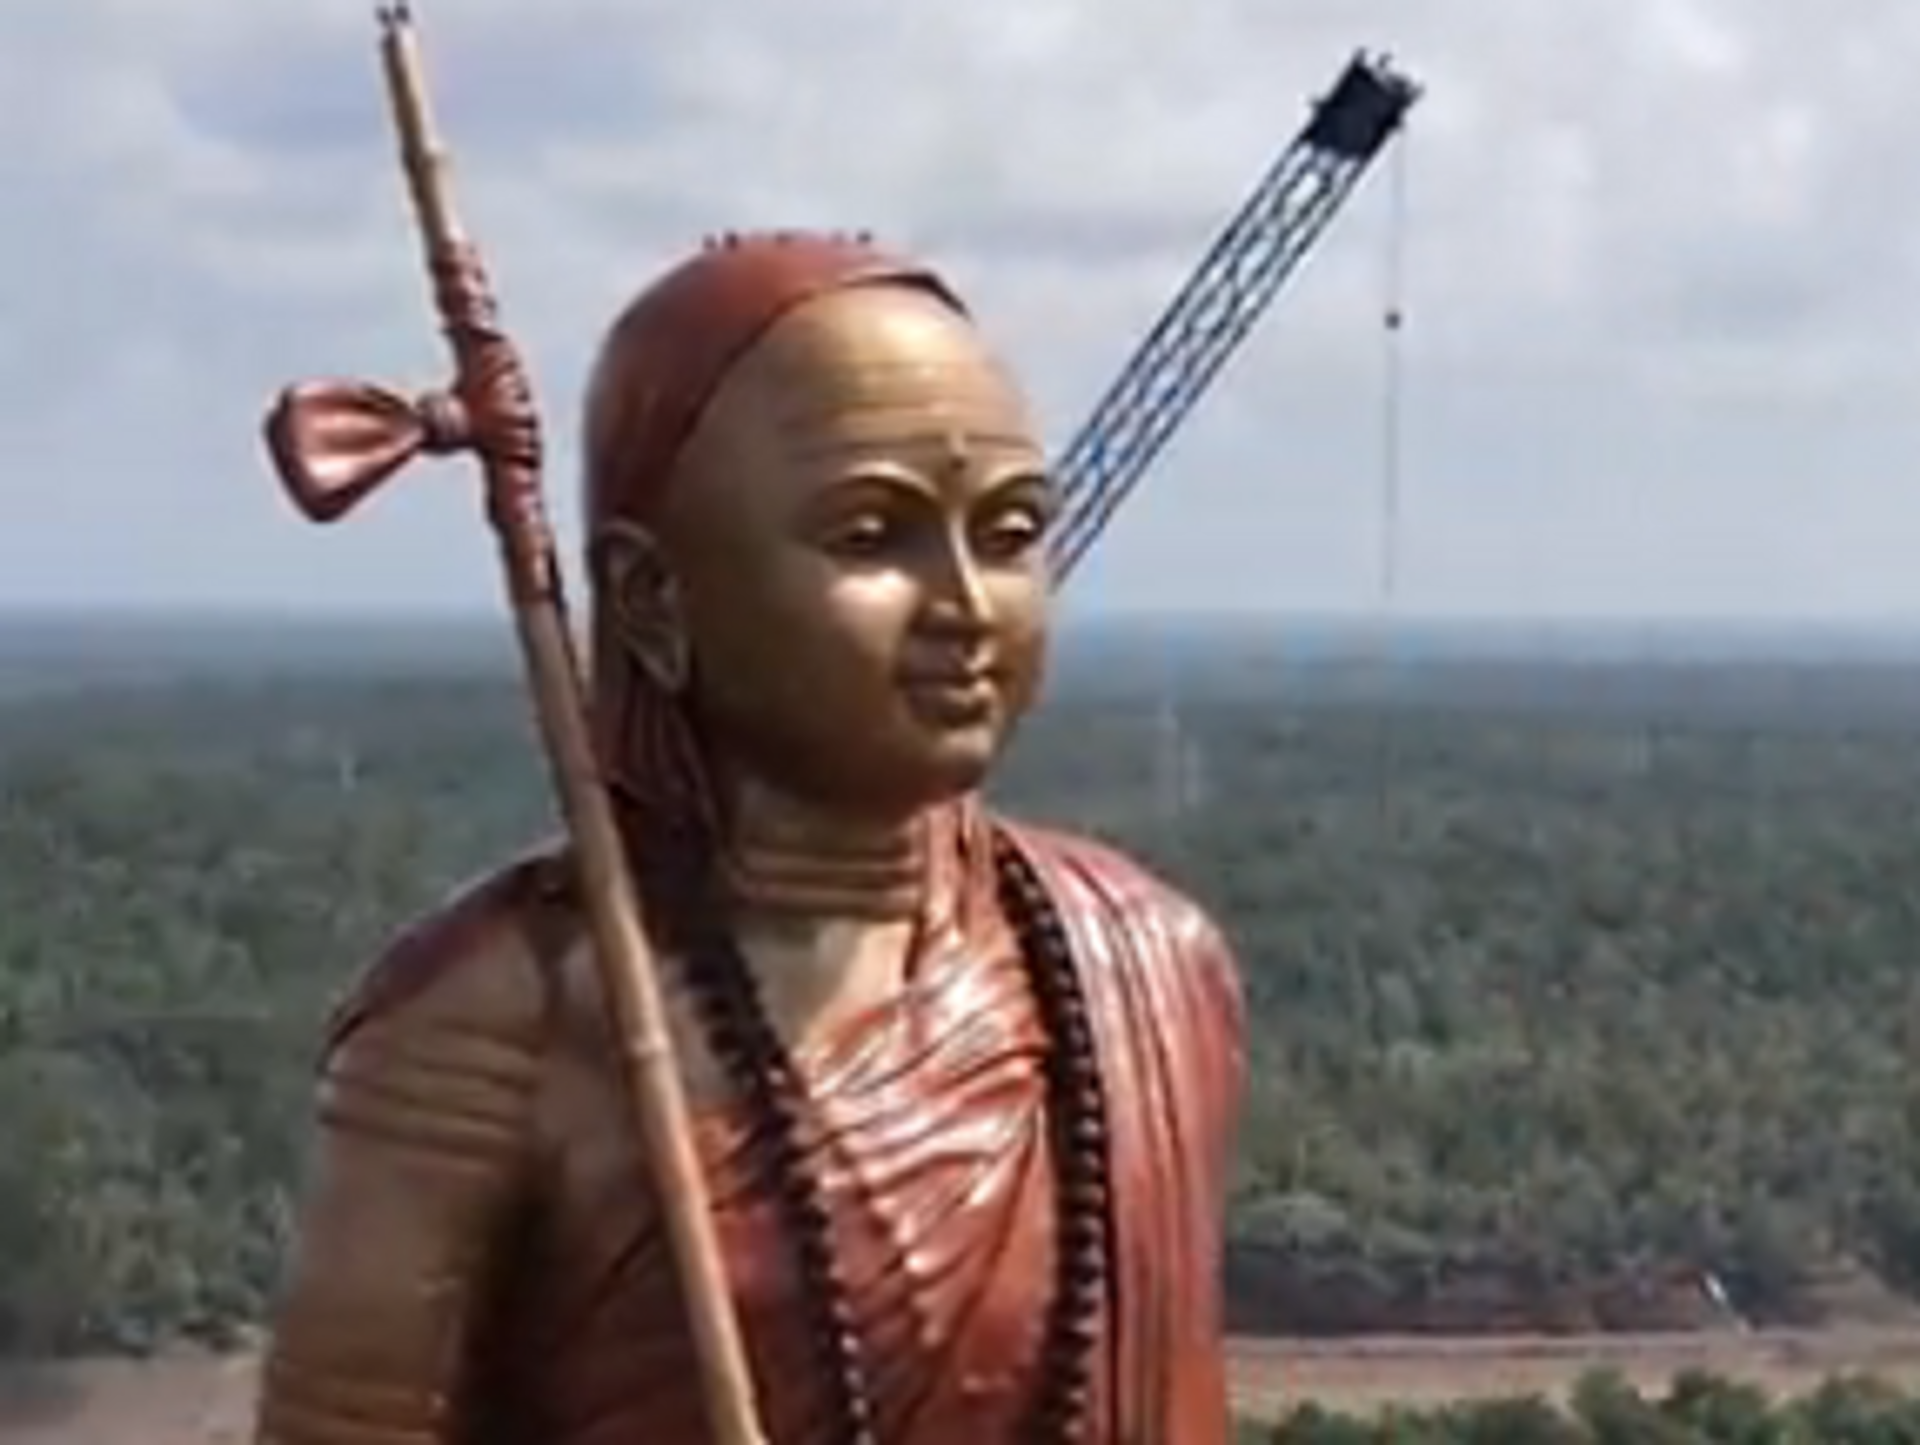 Nataraja Statue At G-20 Venue Brings India's Age-Old Artistry Back